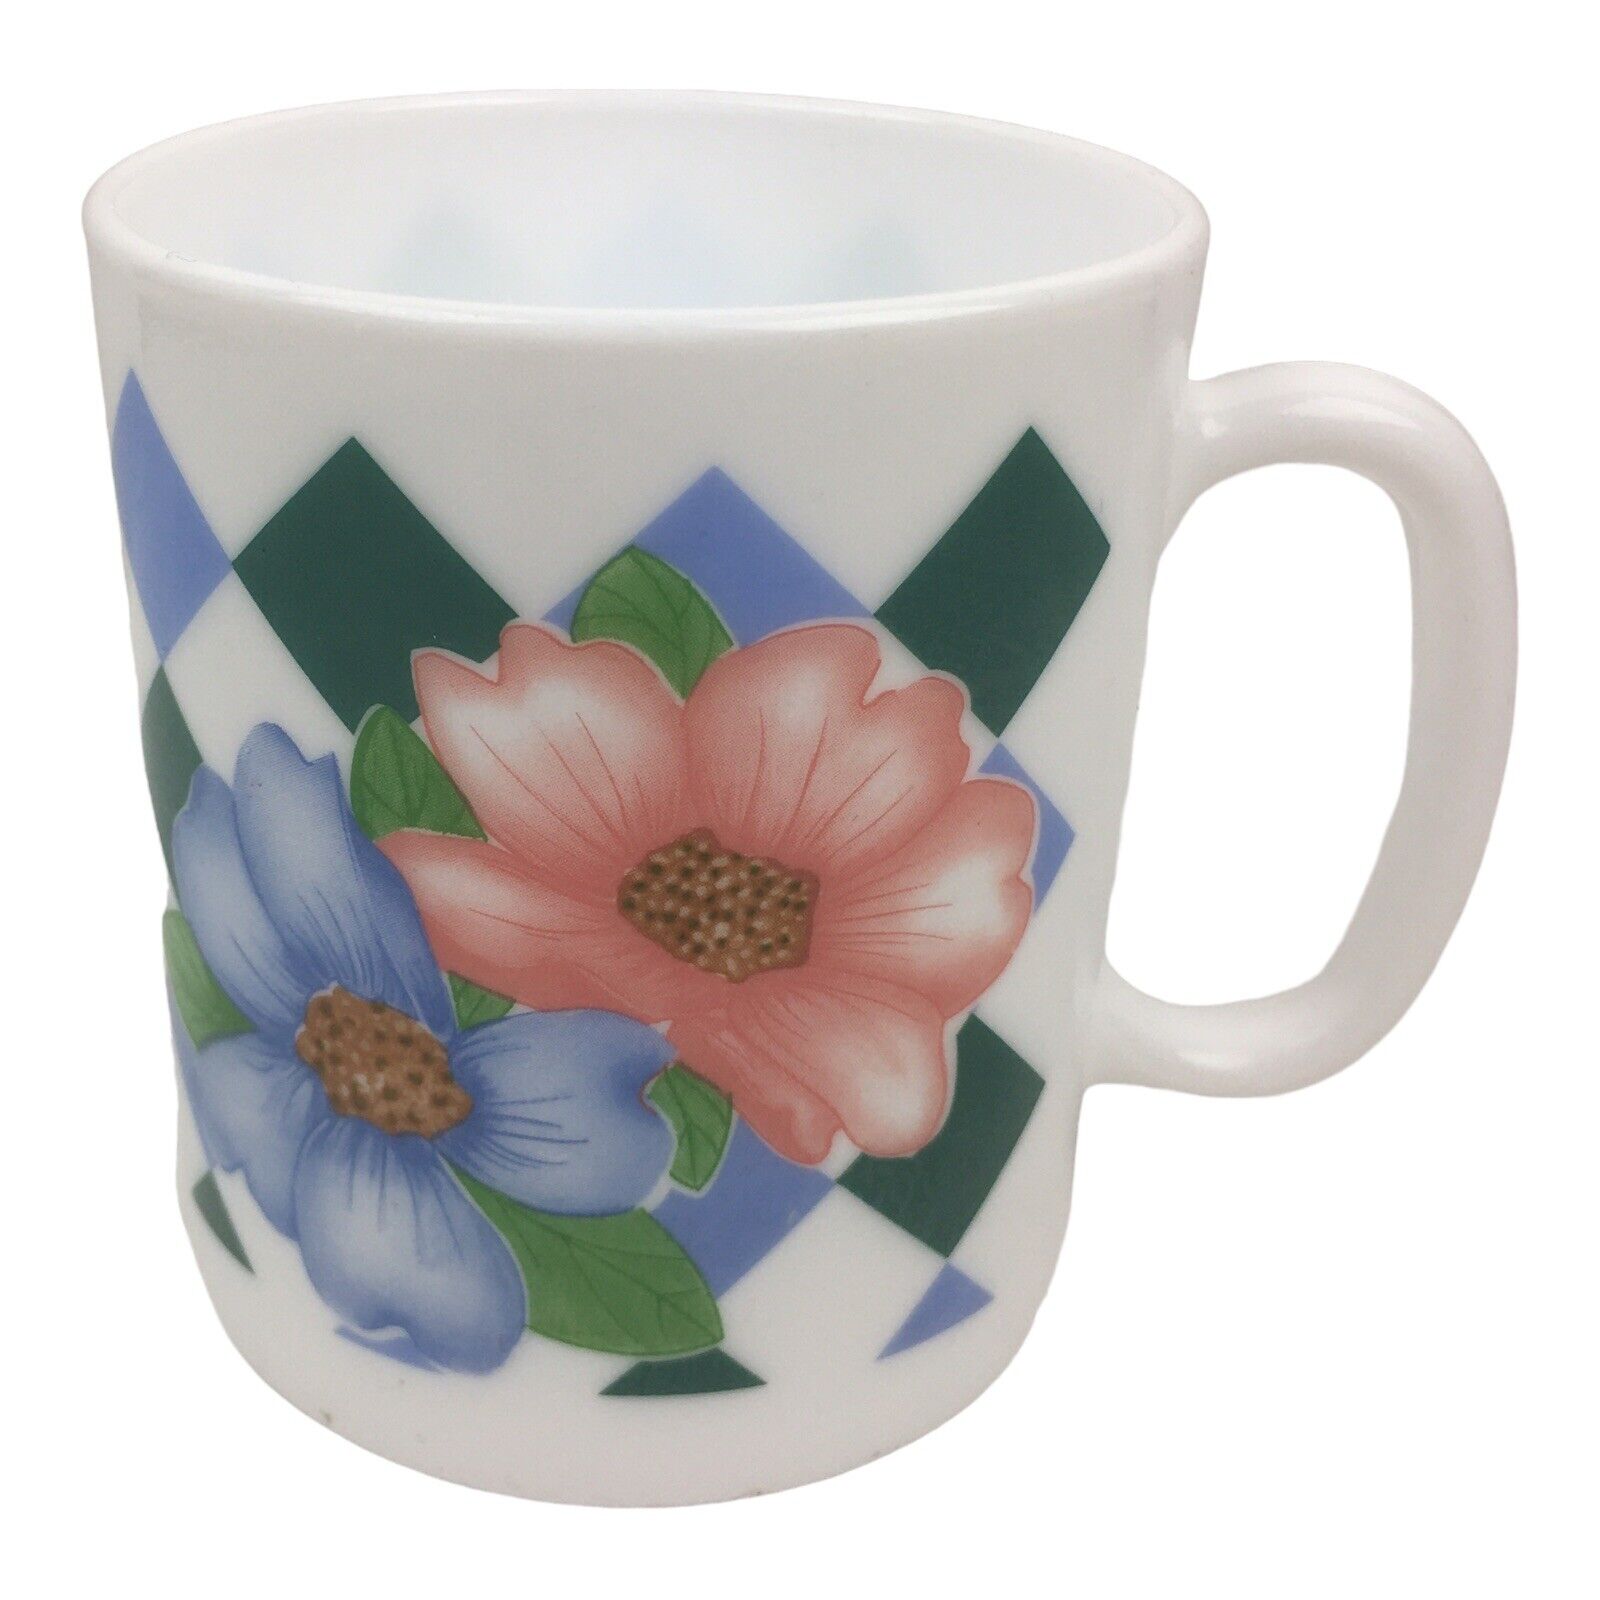 Vintage Arcopal France White Milk Glass Coffee Mug Cup Floral Geometric Diamond